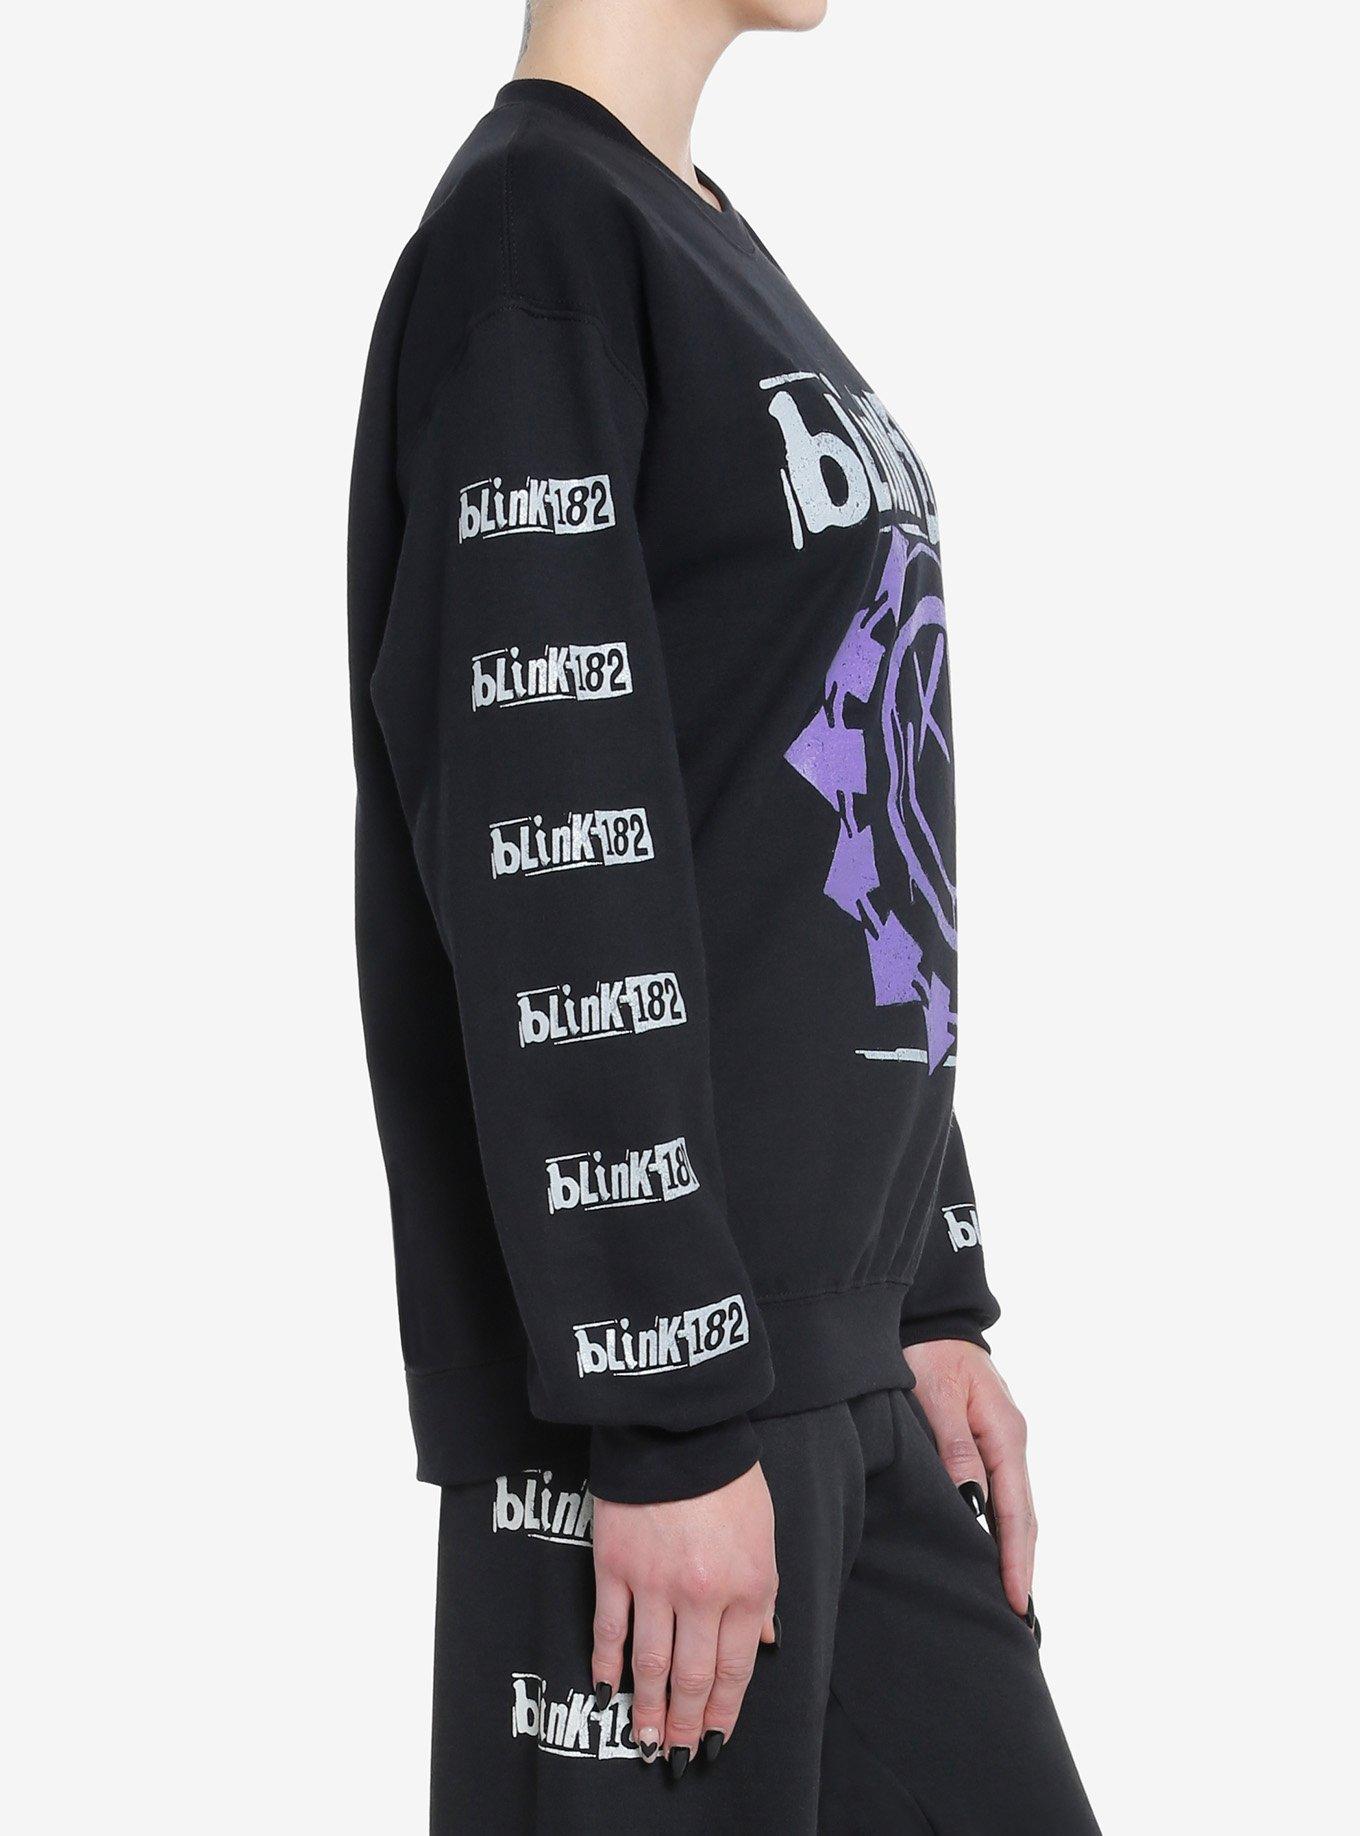 Blink-182 Smile Girls Sweatshirt, BLACK, alternate